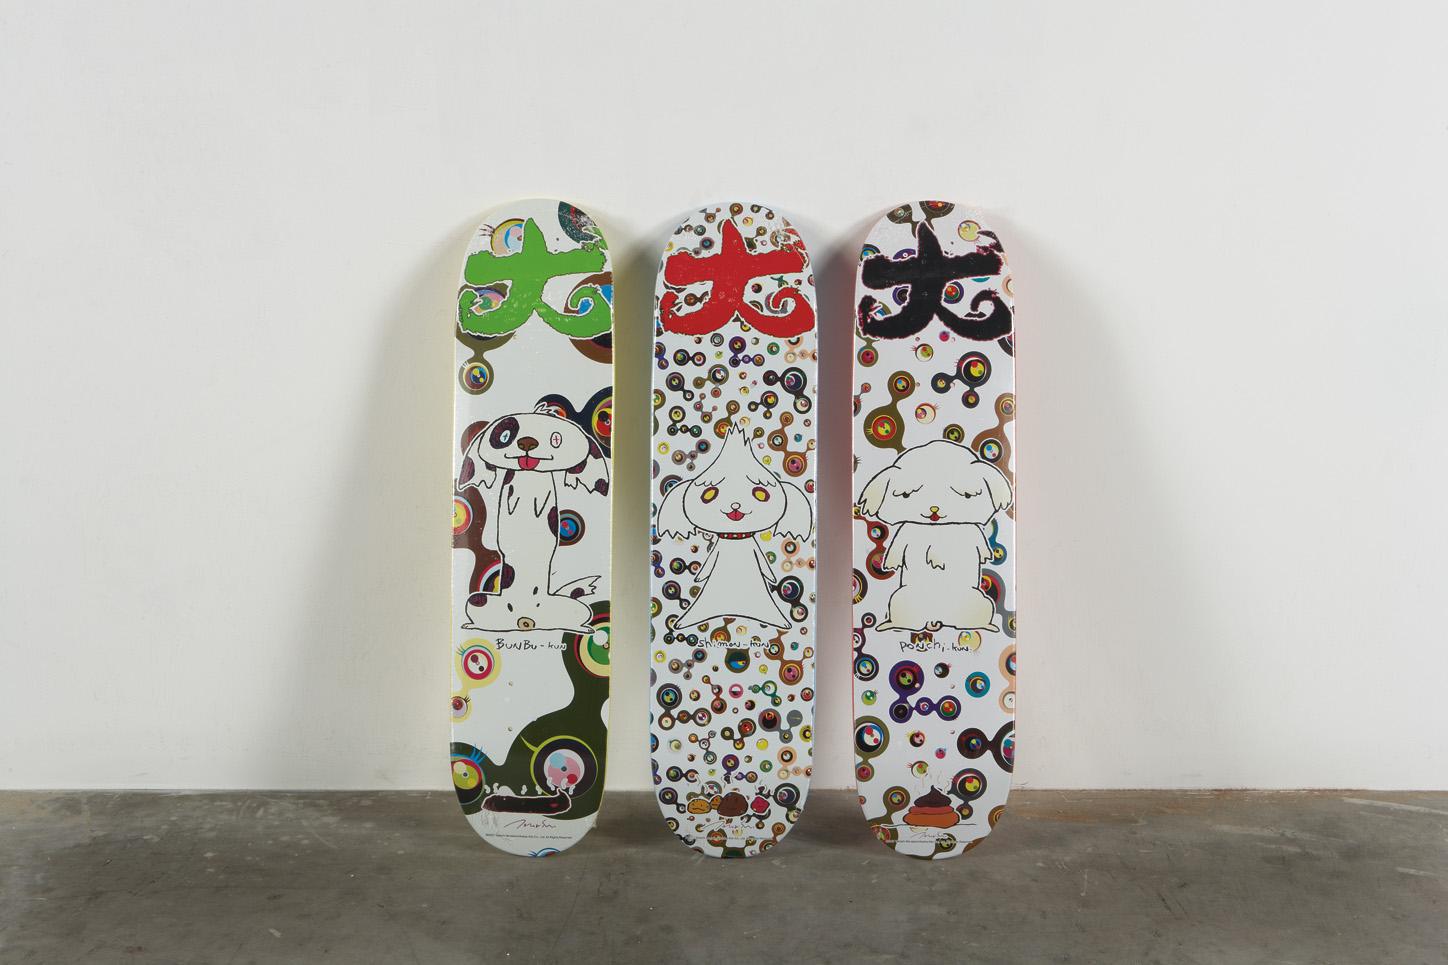 Takashi Murakami, Supreme, Takashi Murakami Supreme skateboard decks 2007  (set of 3 works) (2007), Available for Sale